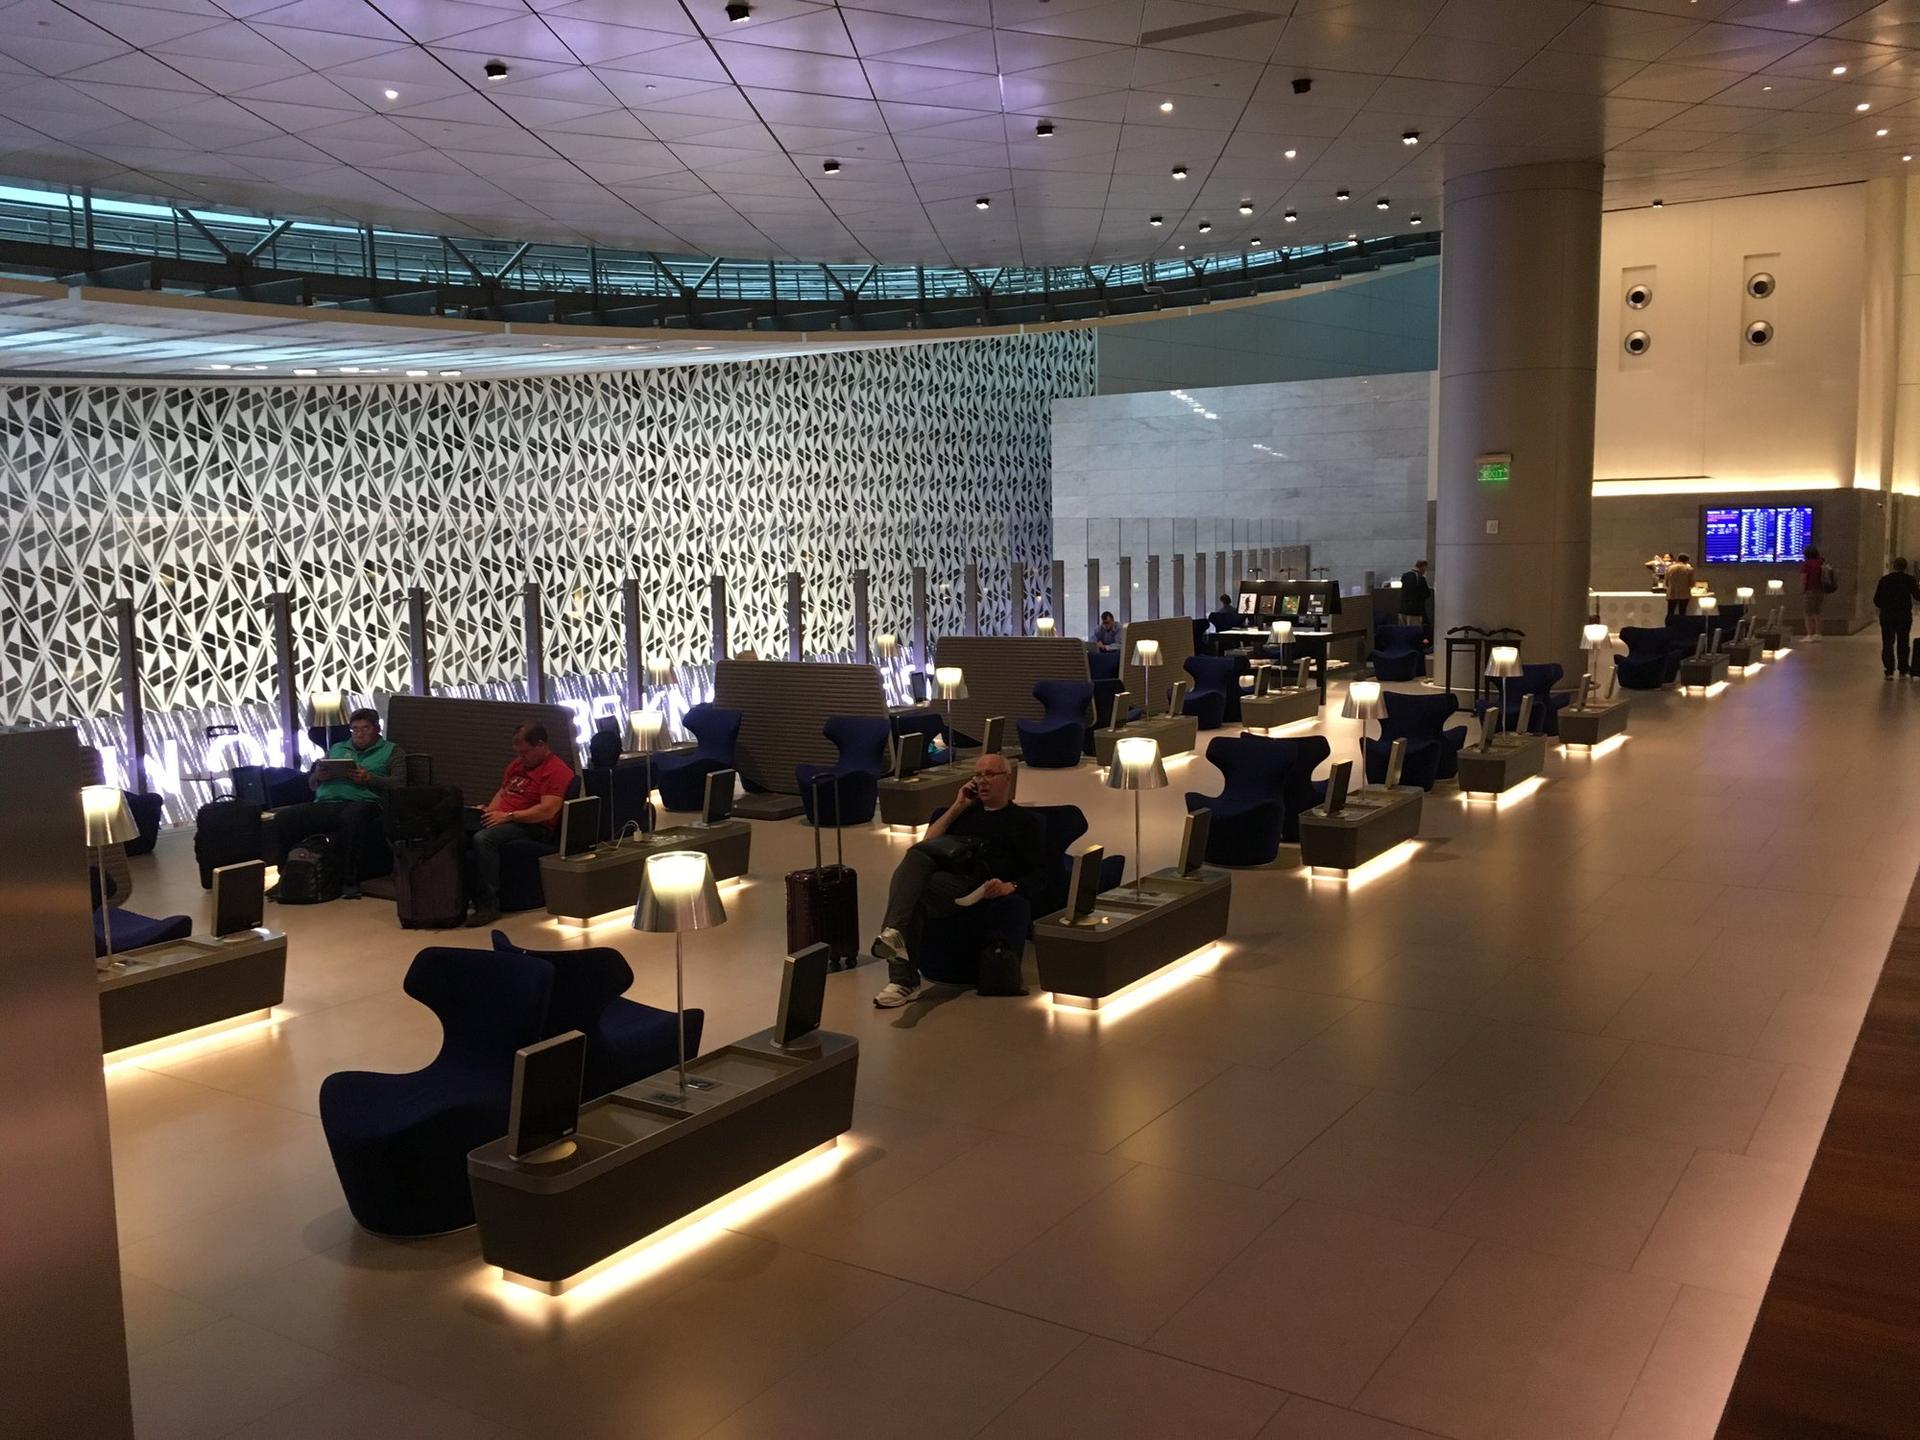 Qatar Airways Al Mourjan Business Class Lounge image 78 of 100